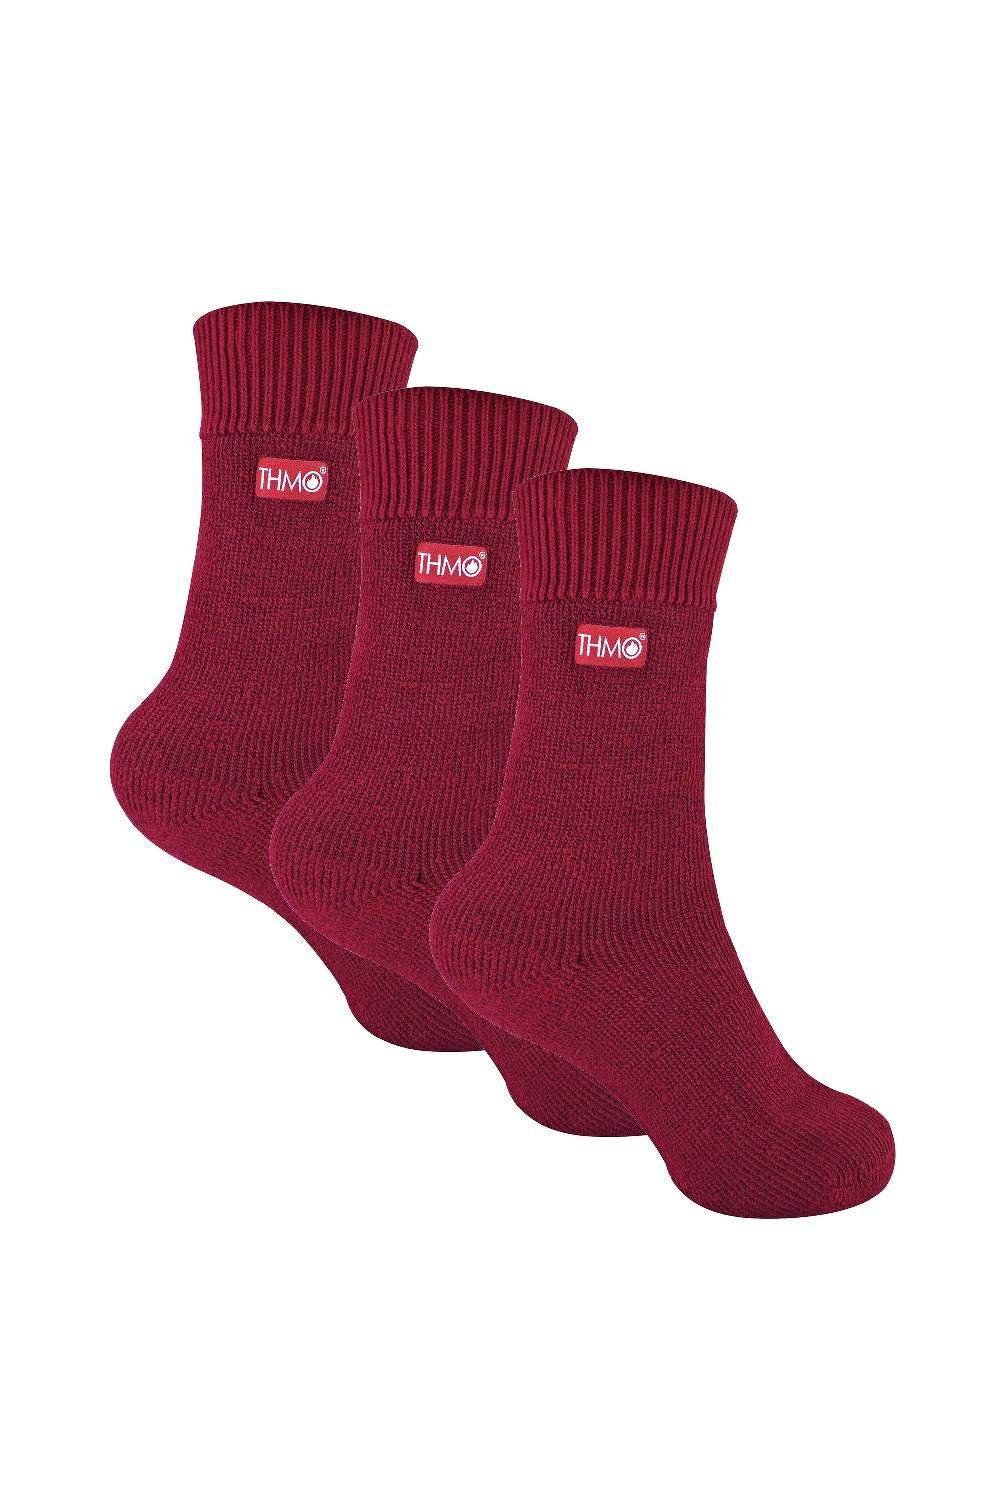 3 Pairs Warm Soft Top Thermal Inner Fleece Socks